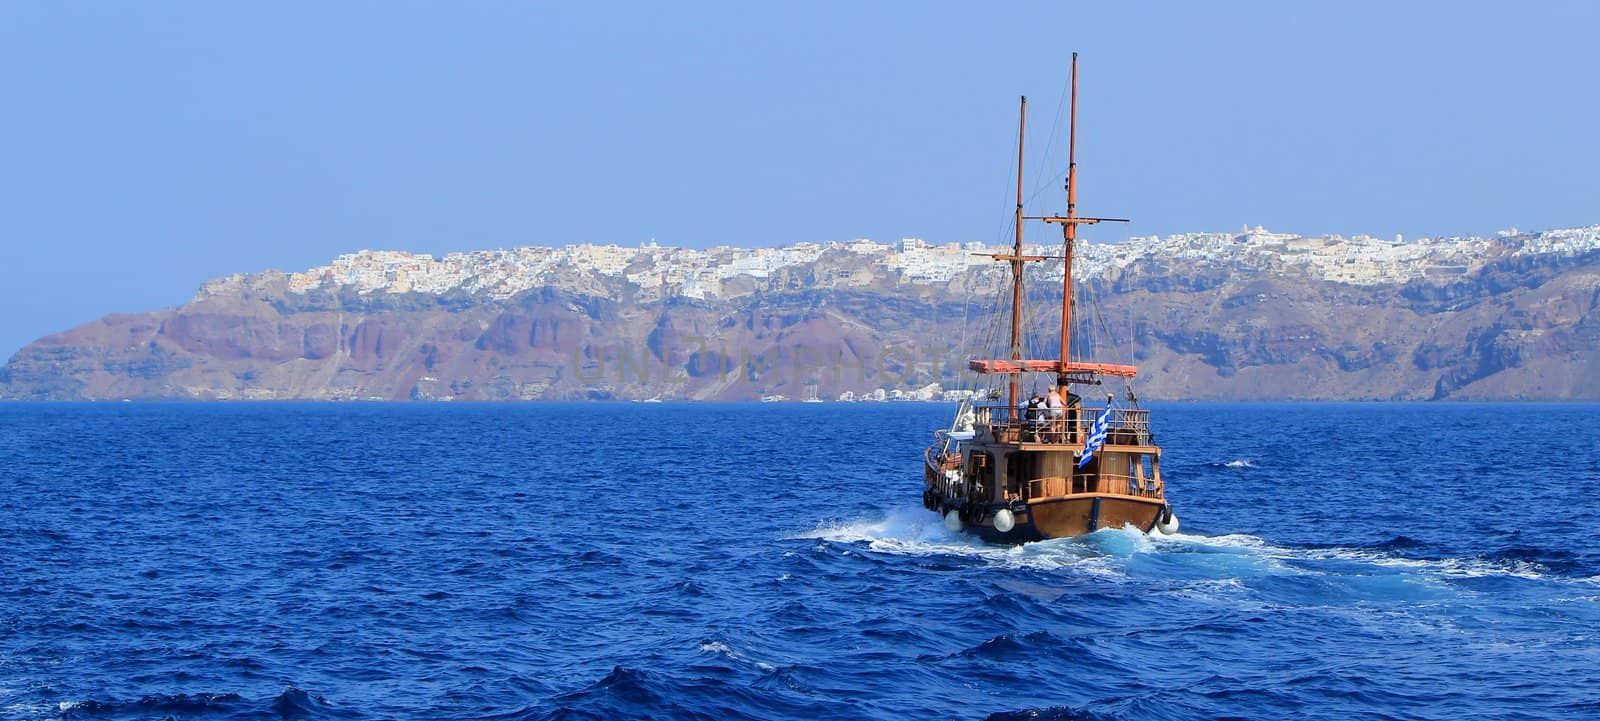 Tourists boat going to Oia, Santorini, Greece by Elenaphotos21